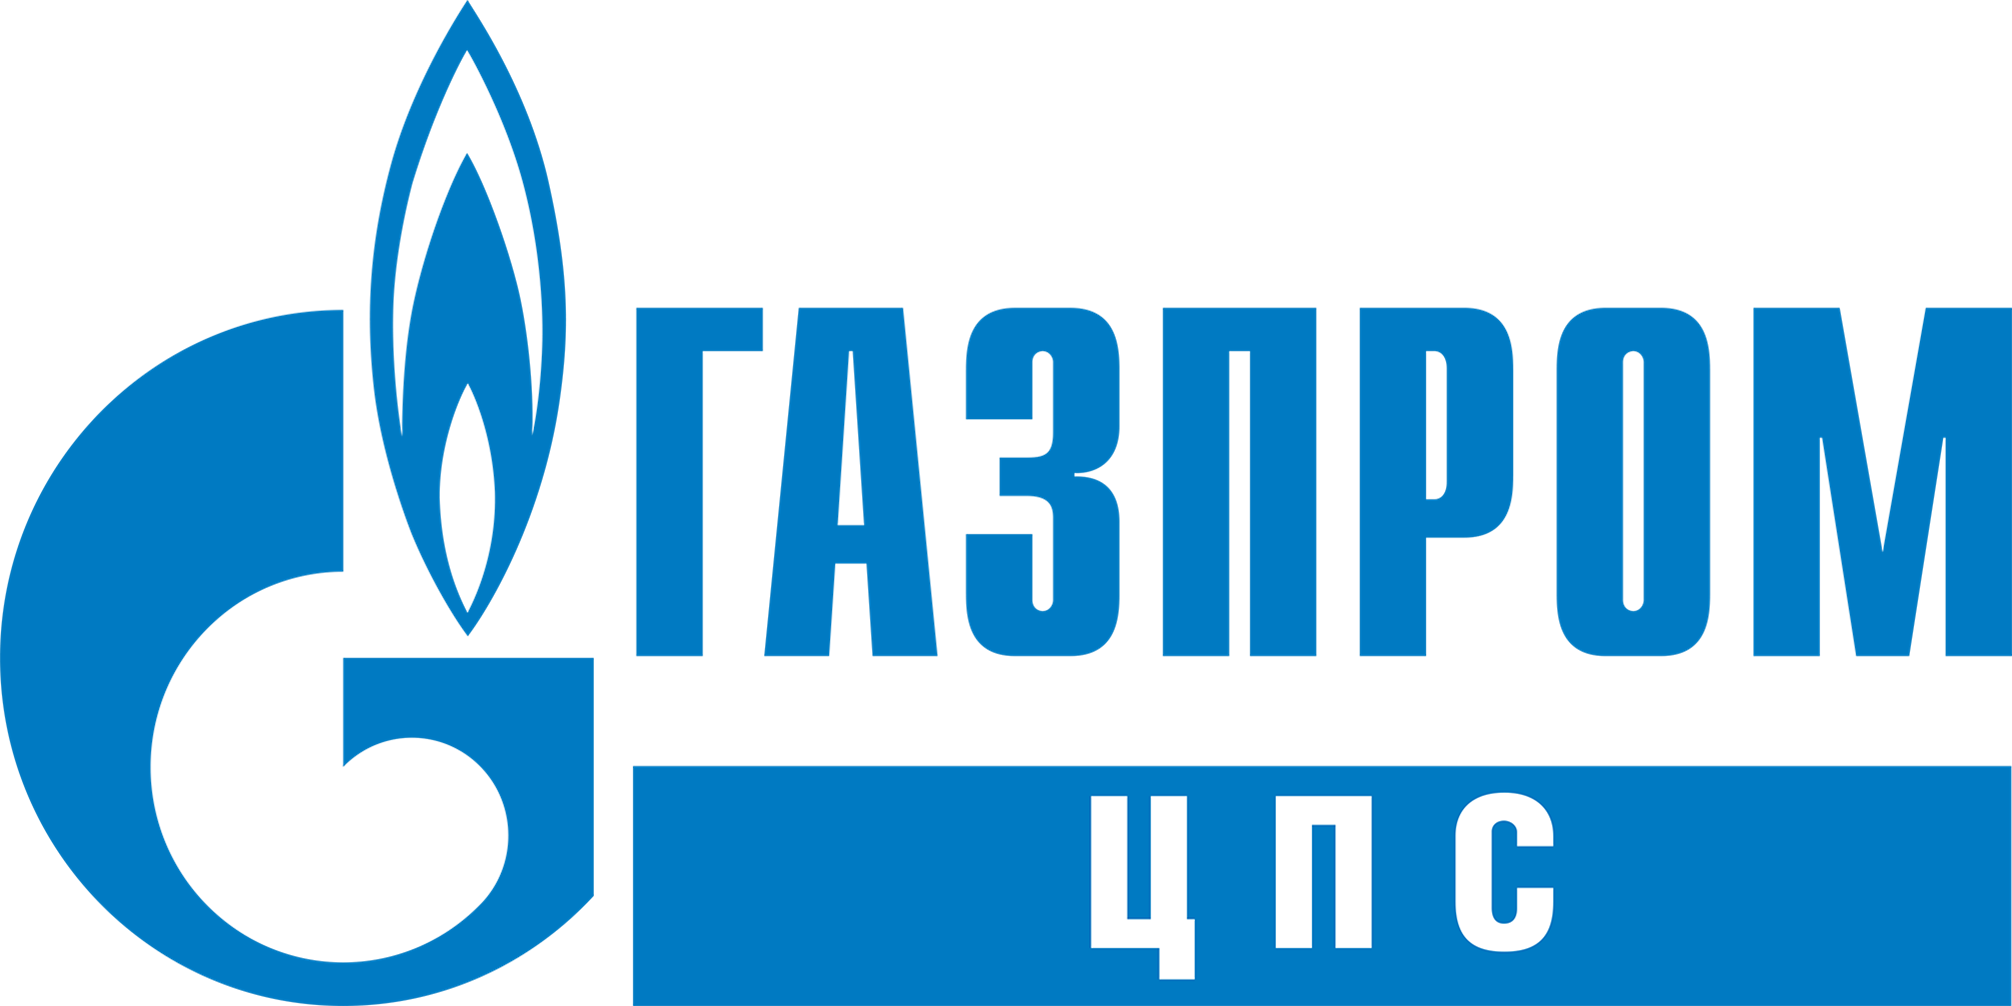 Газпром ЦПС